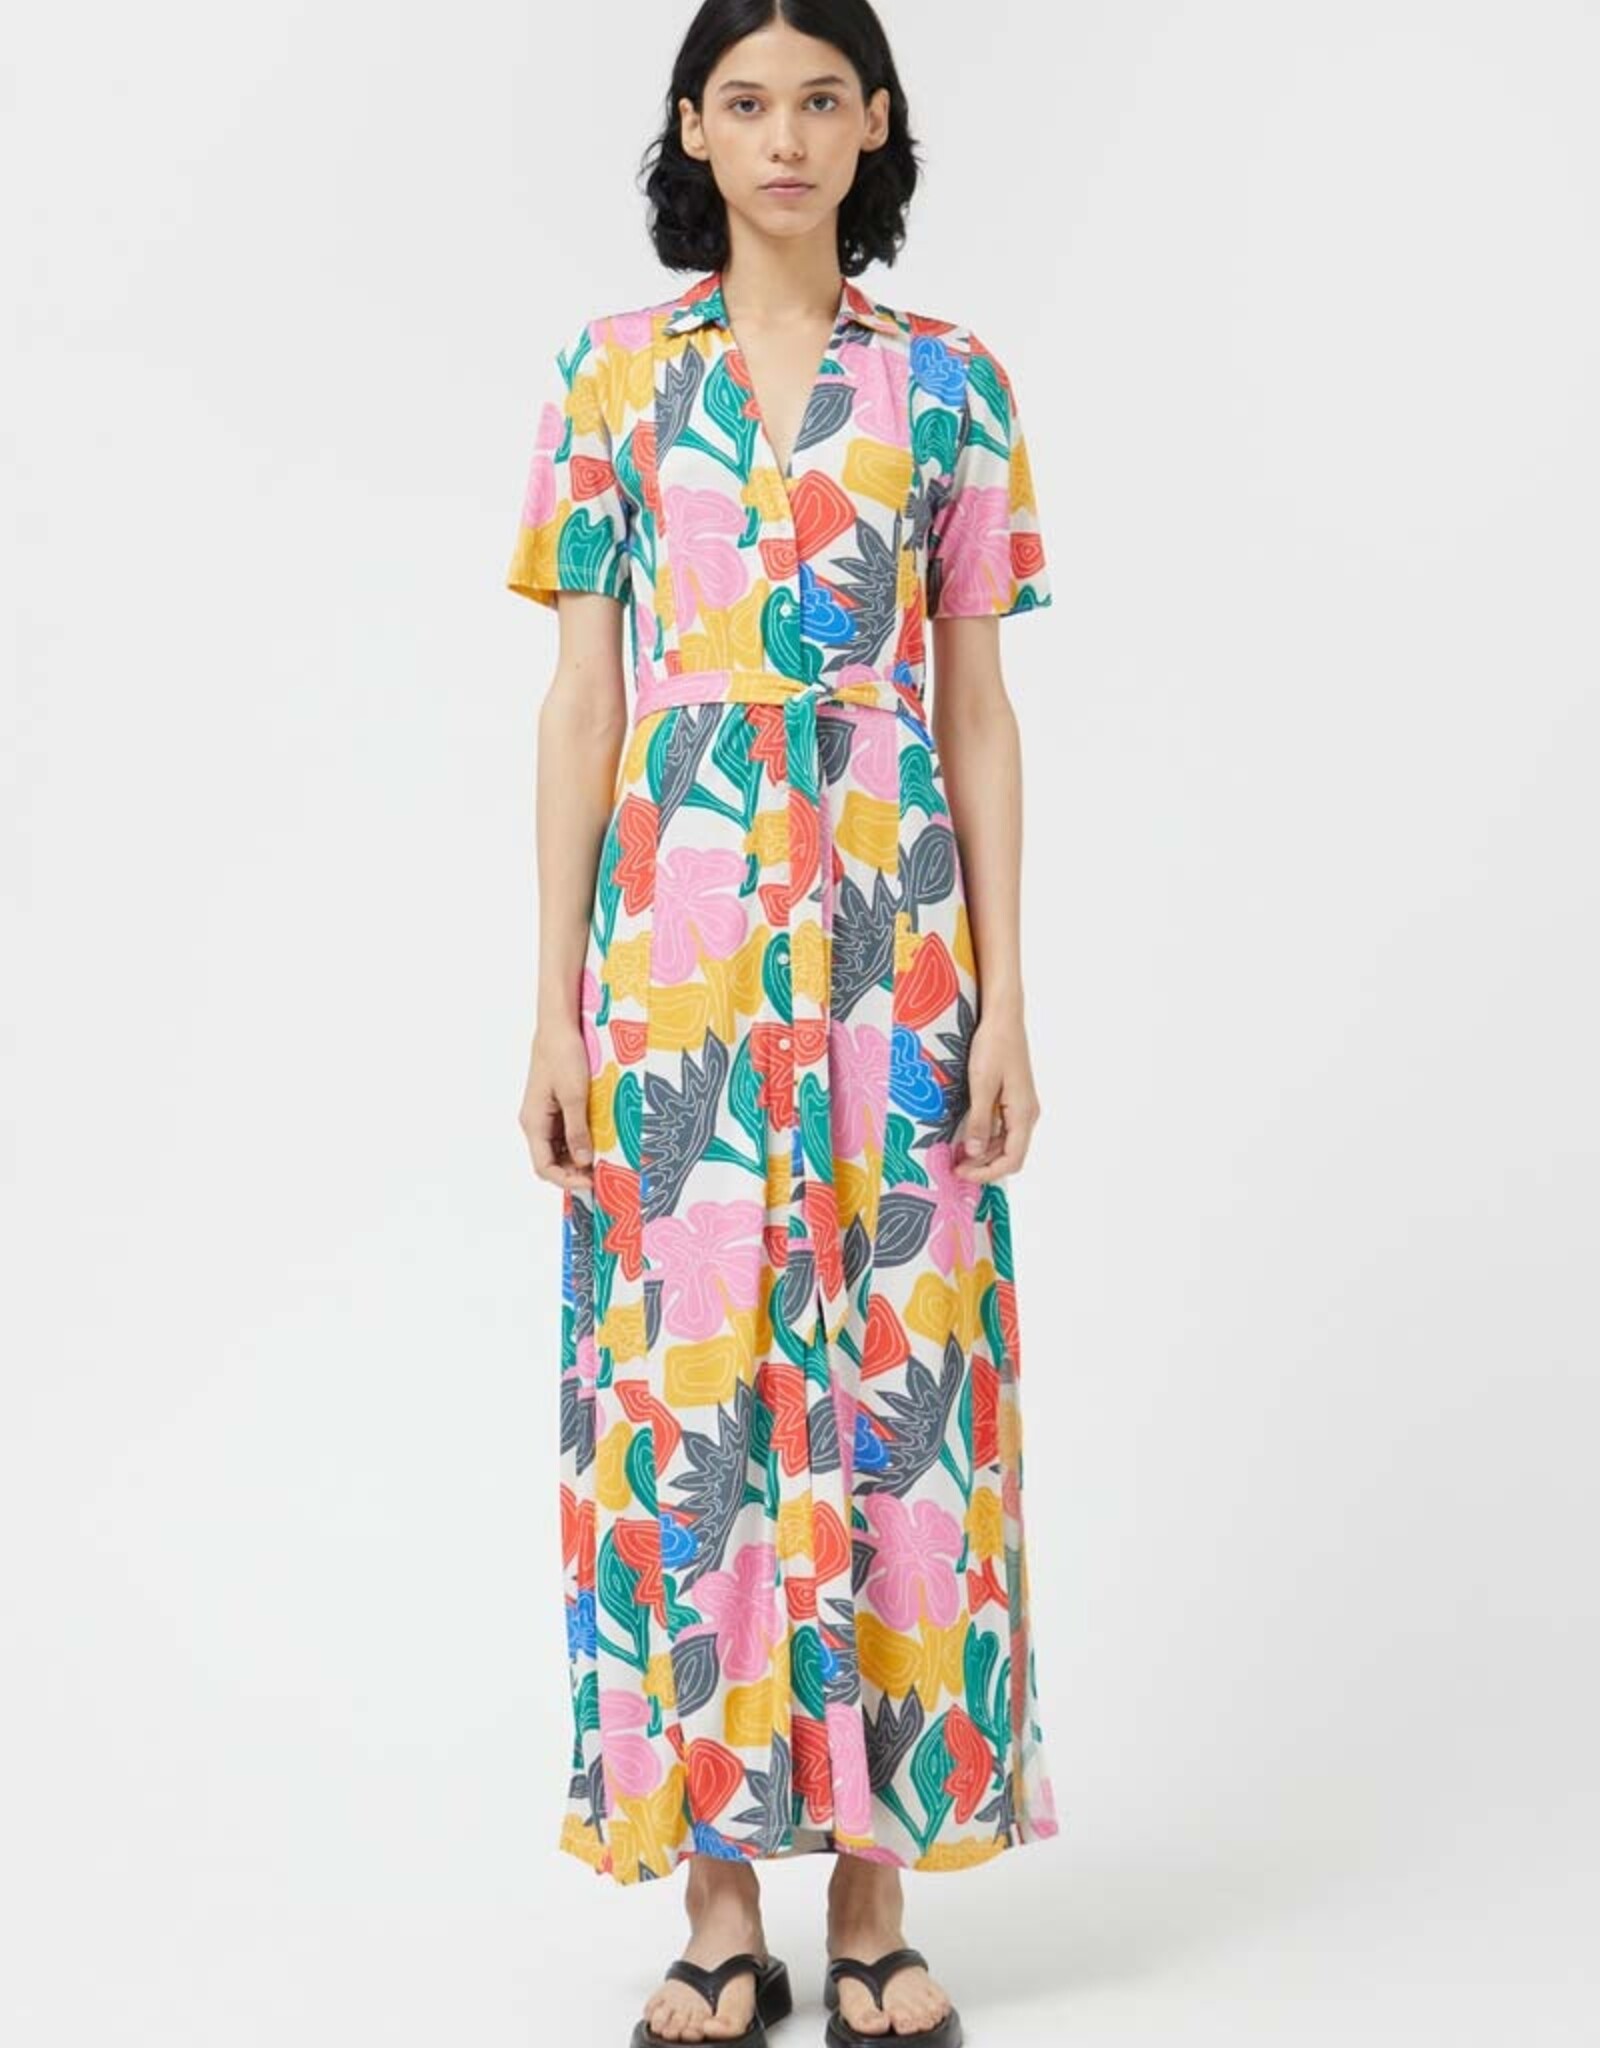 Compania Fantastica MultiColour Print Wrap Dress